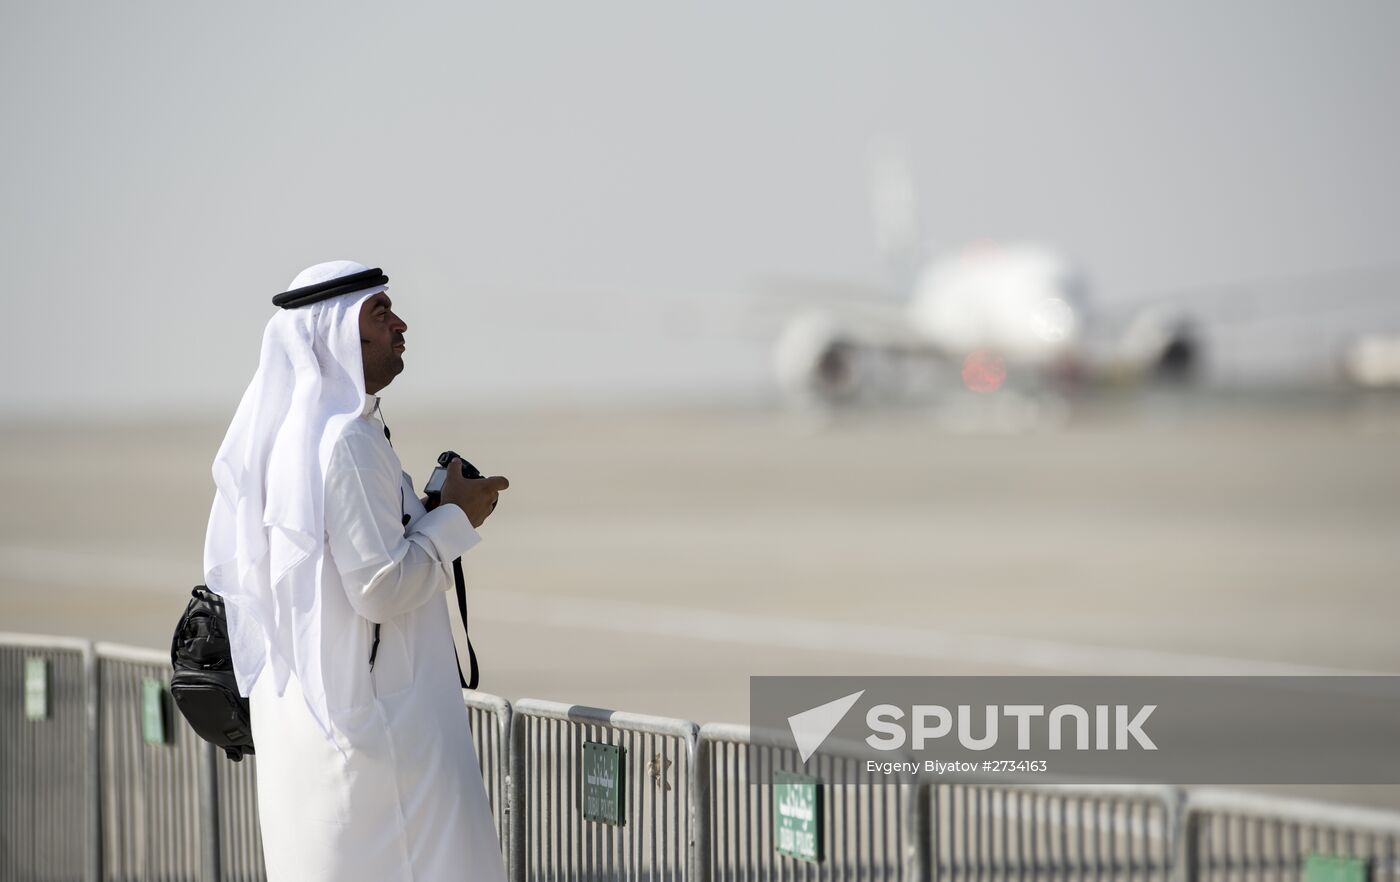 2015 Dubai Airshow. Day One